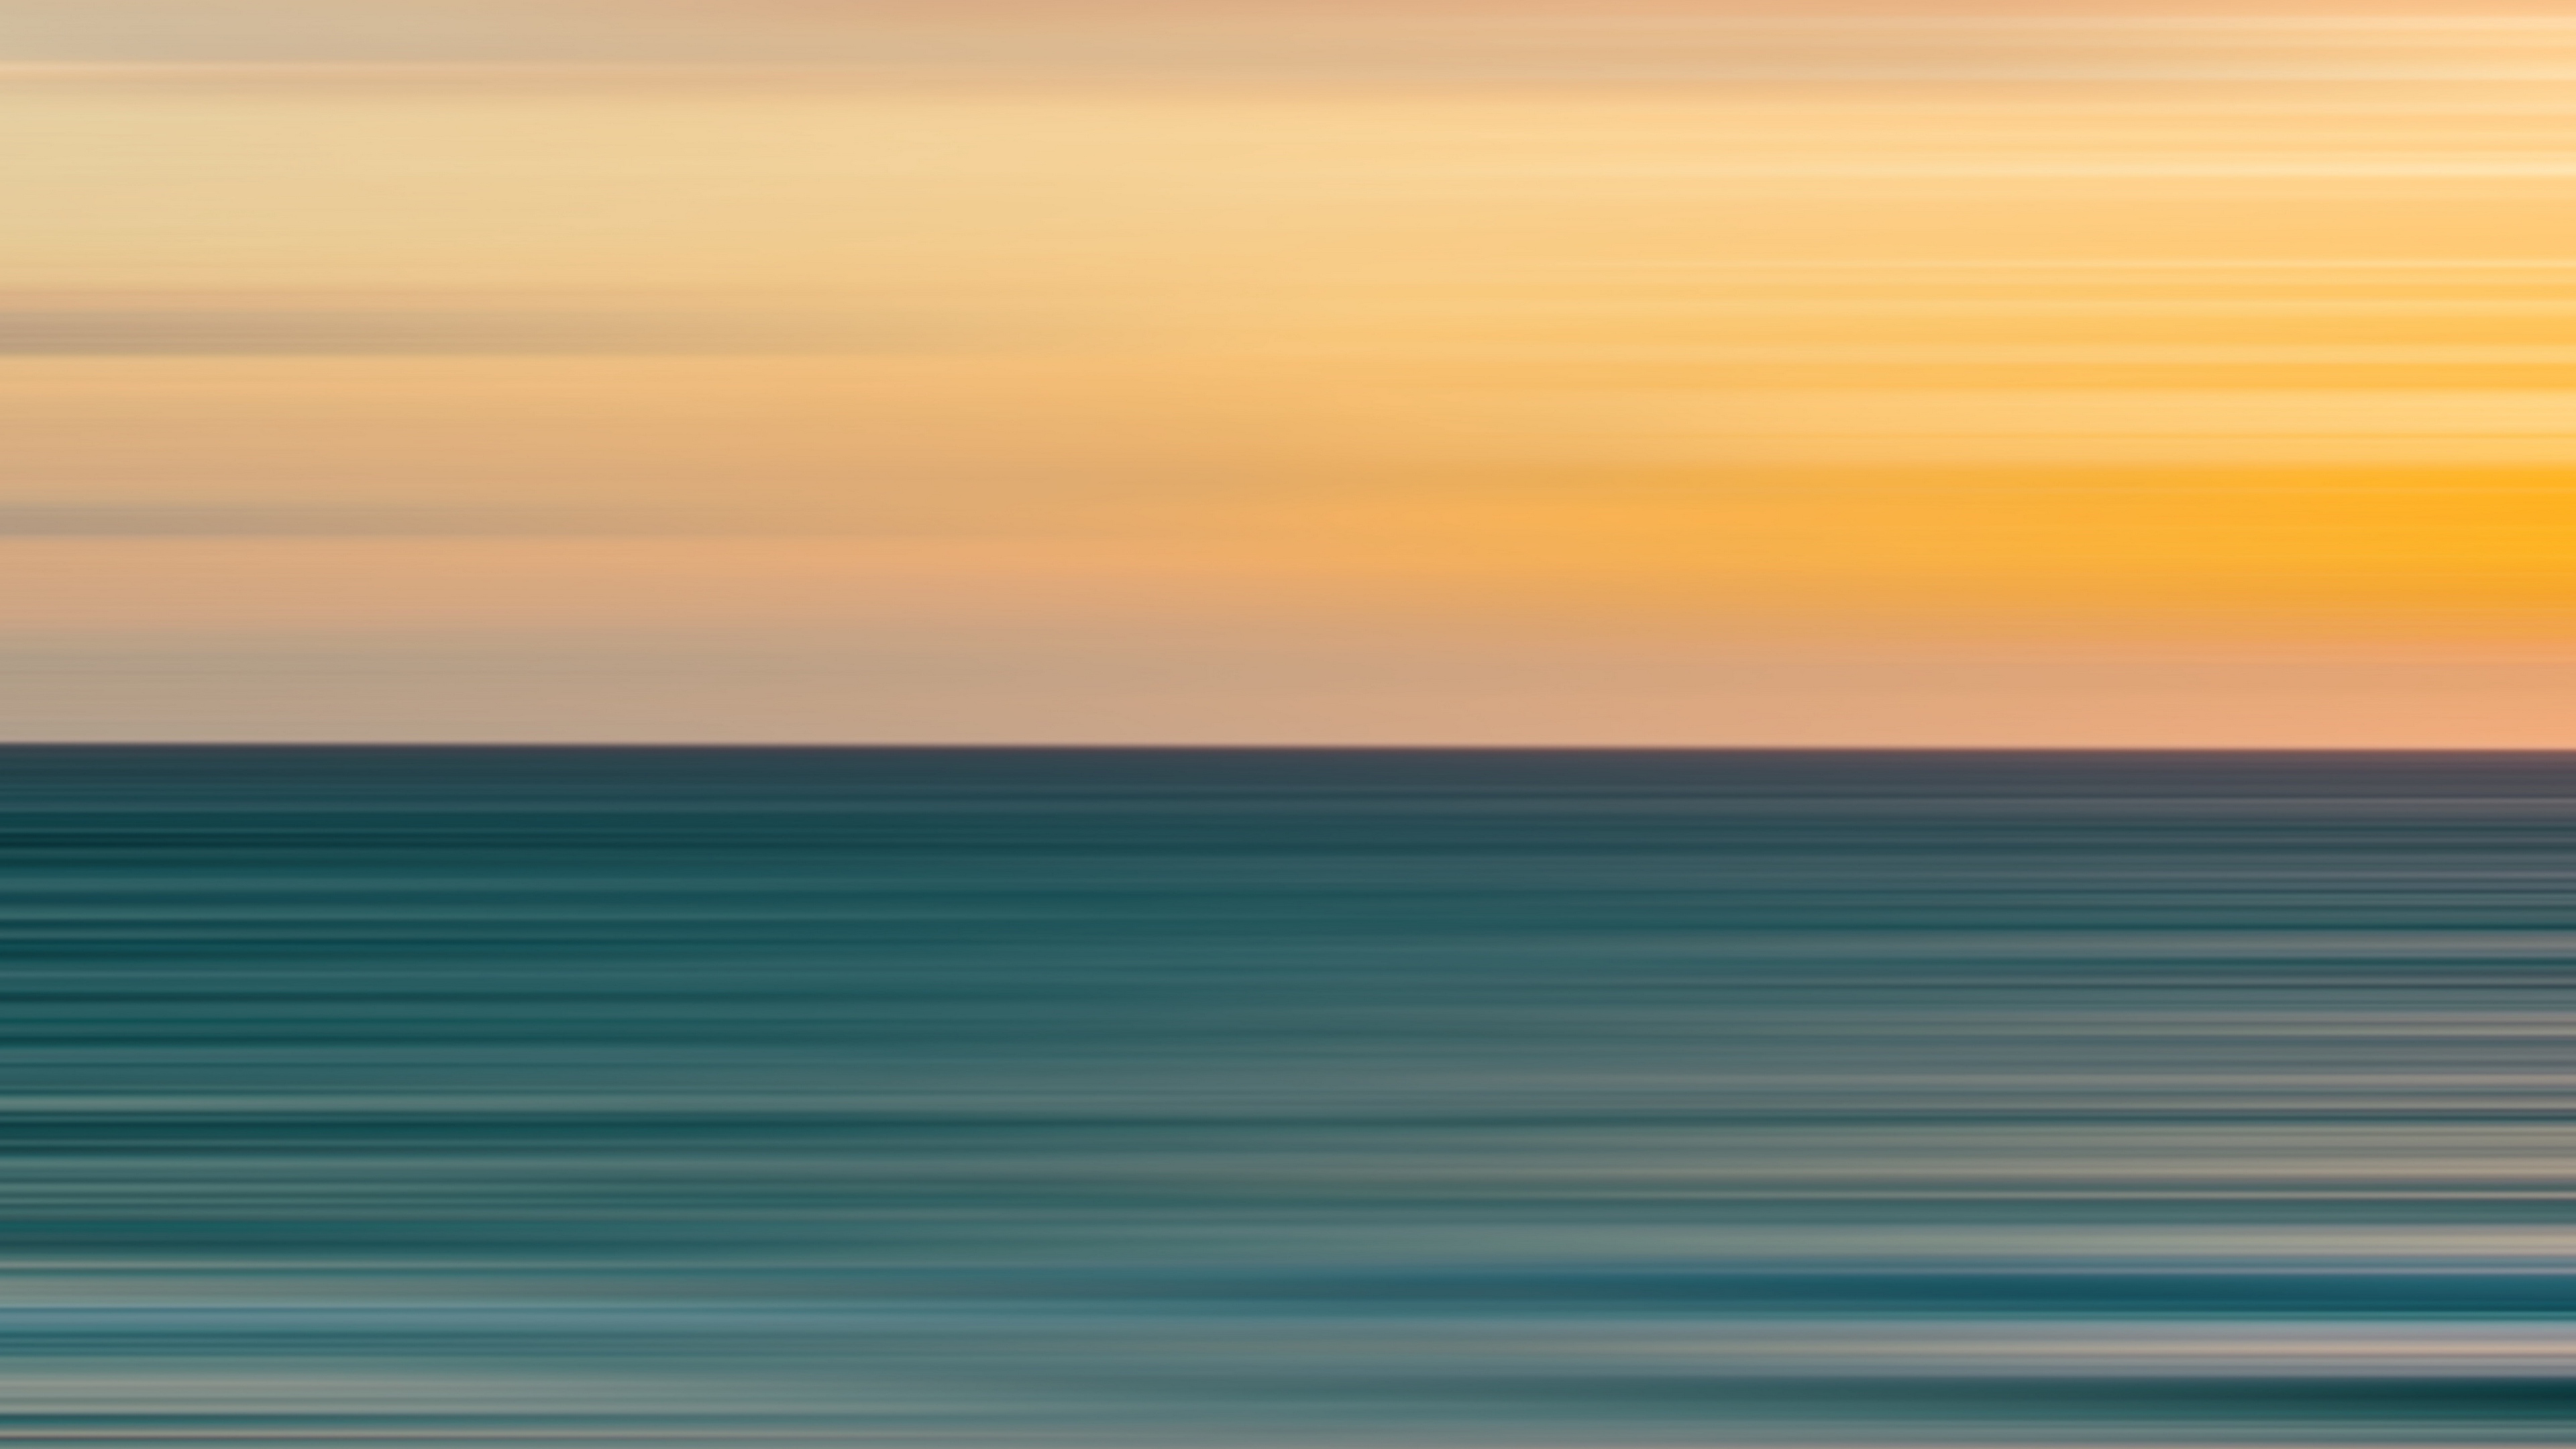 Download wallpaper 3840x2160 sunset, horizon, long exposure, blurred